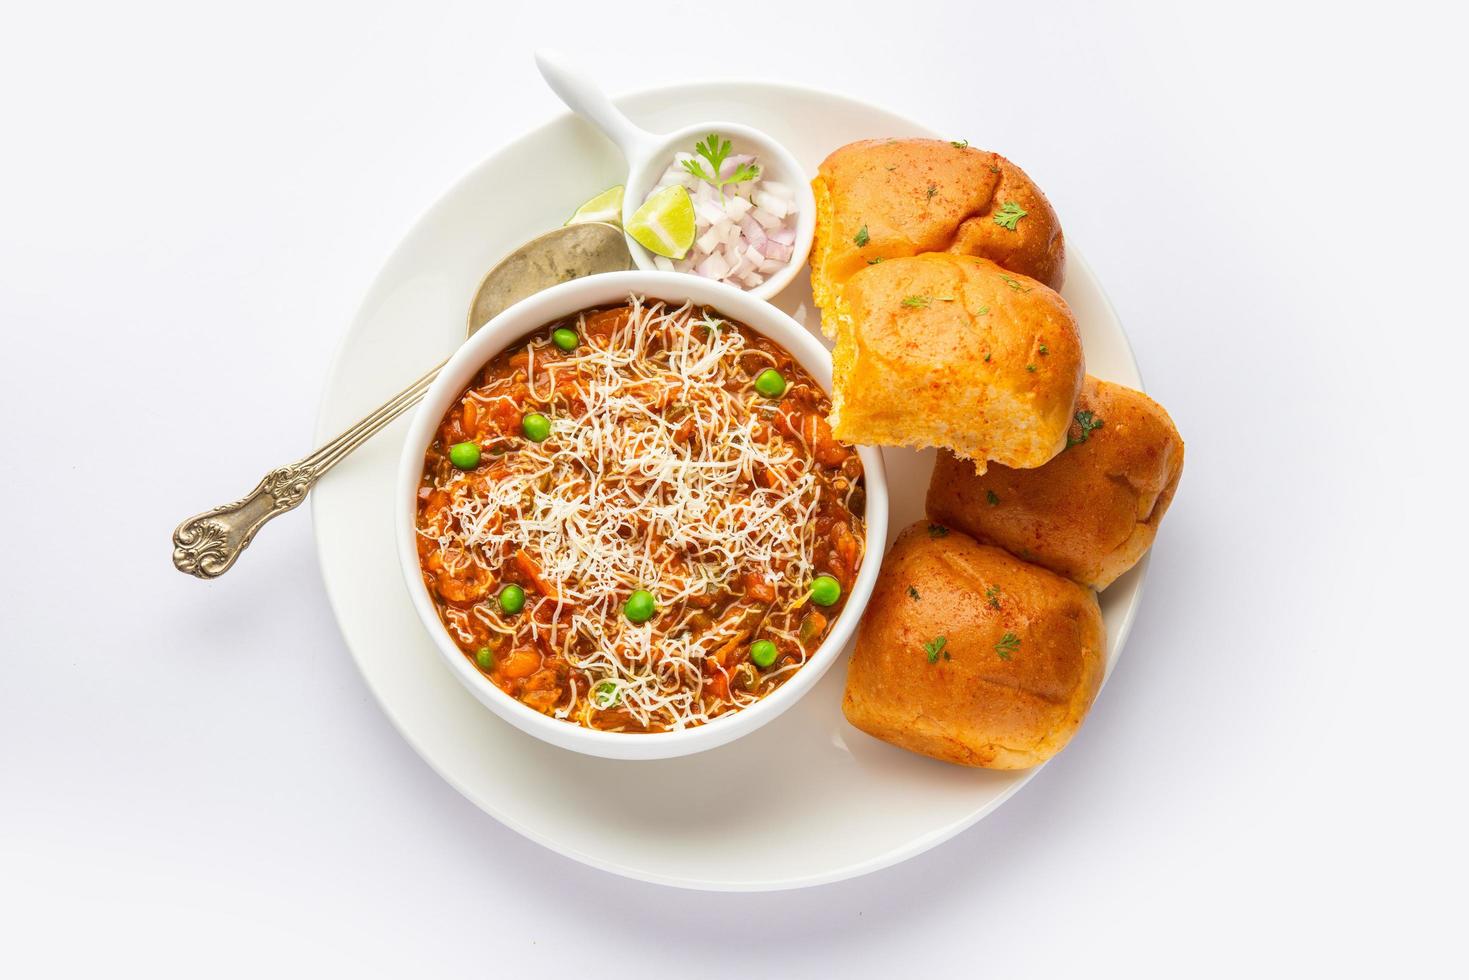 kaas pav bhaji recept is een straat voedsel bhaji-pav recept met toevoeging van kaas foto